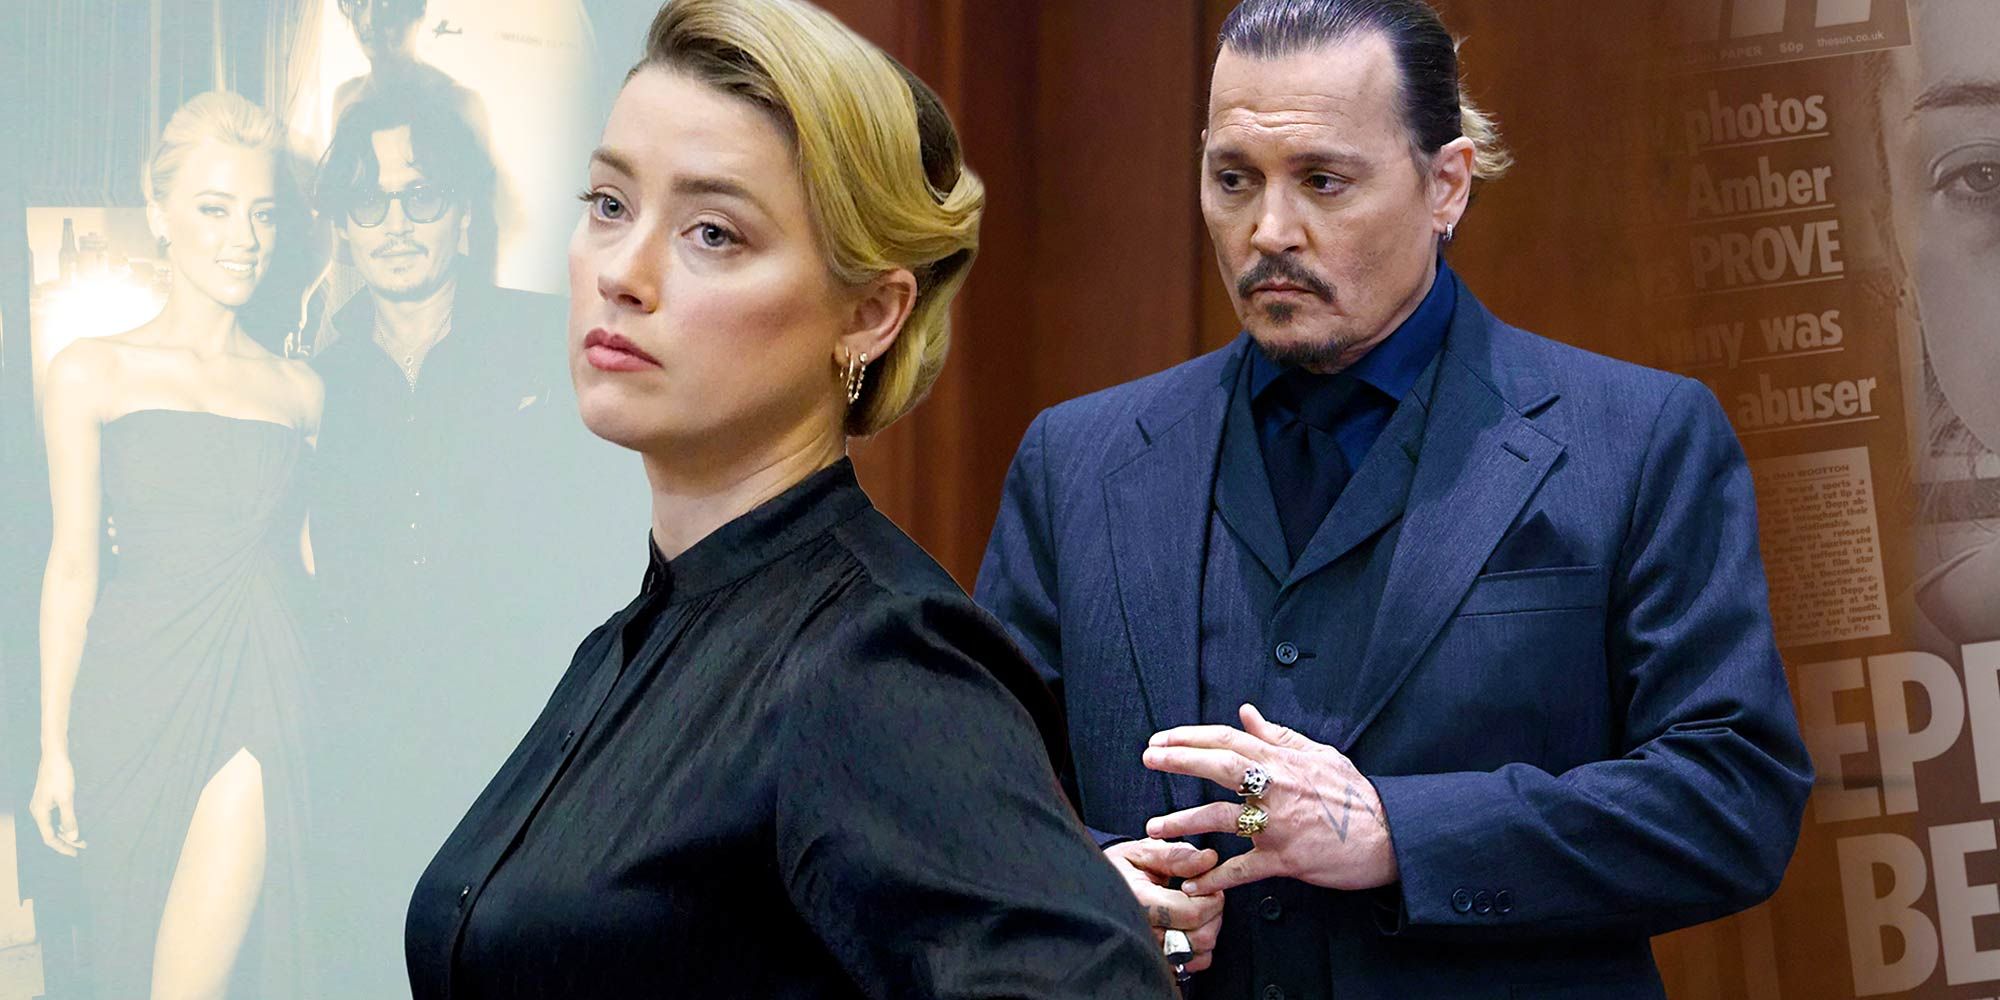 All updates for Johnny Depp vs. Amber Heard trial